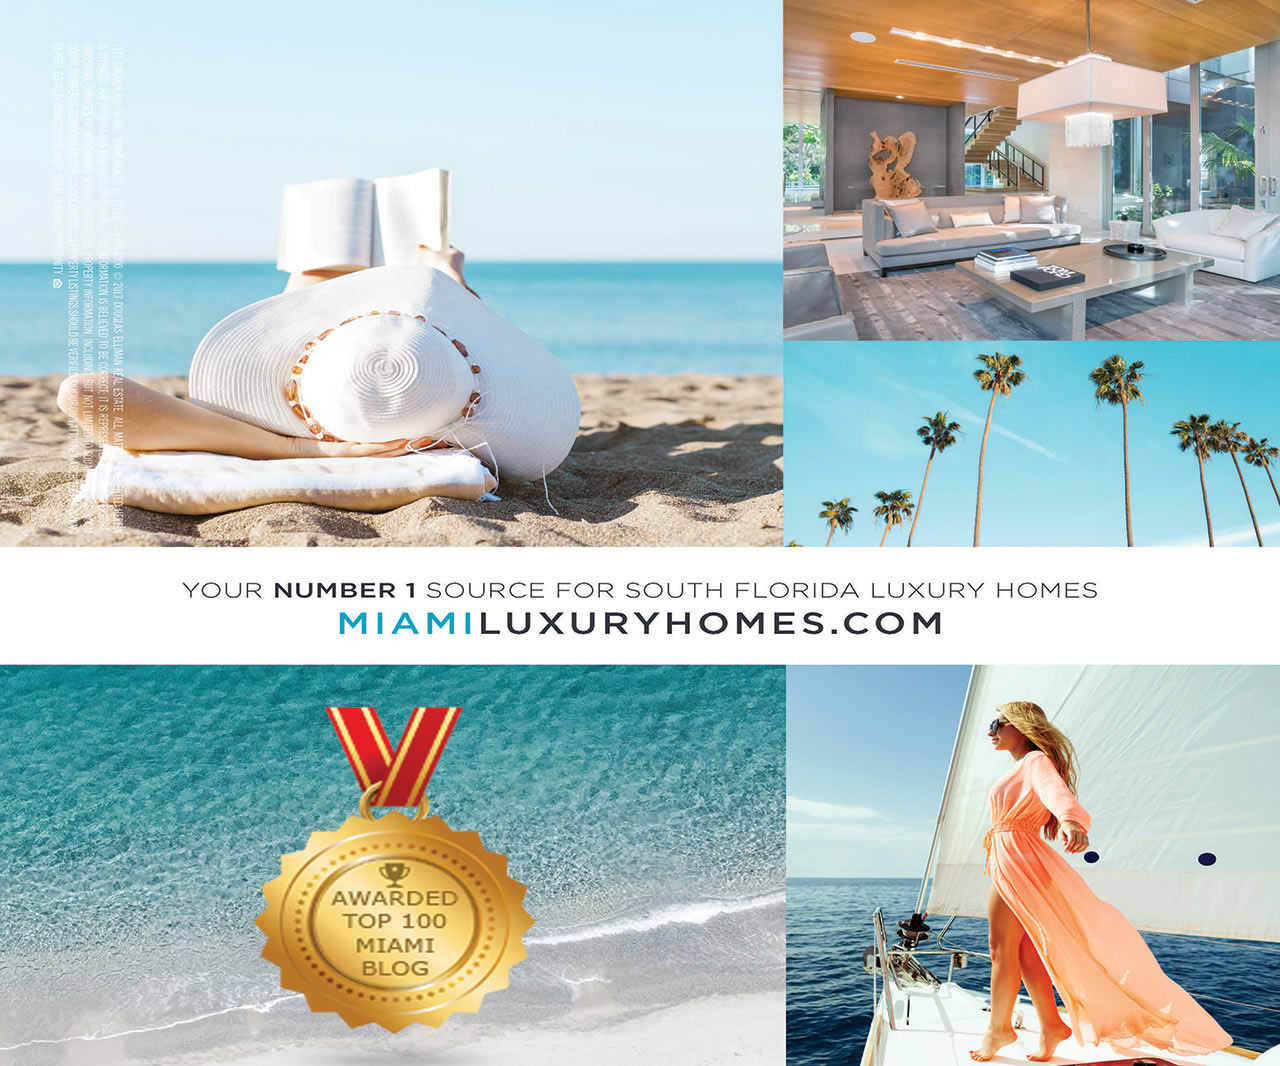 Miami Luxury Homes Ranks #1 Private Real Estate Blog in Miami & #15 Nationally